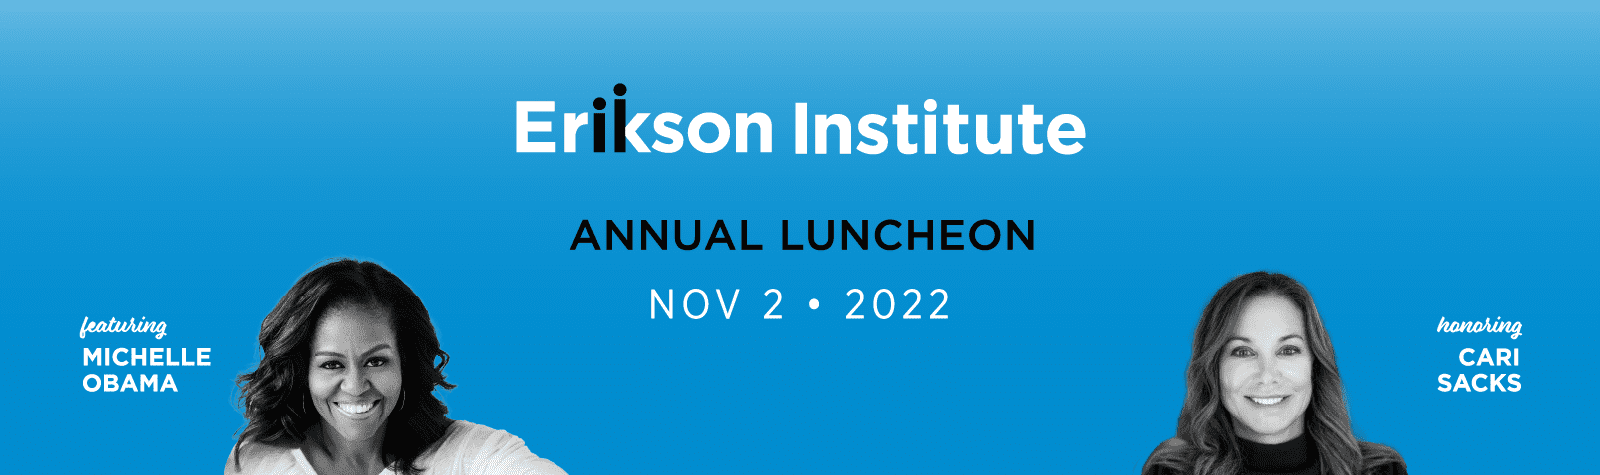 Erikson Institute Annual Luncheon Nov 2, 2022 featuring Michelle Obama, honoring Cari Sacks